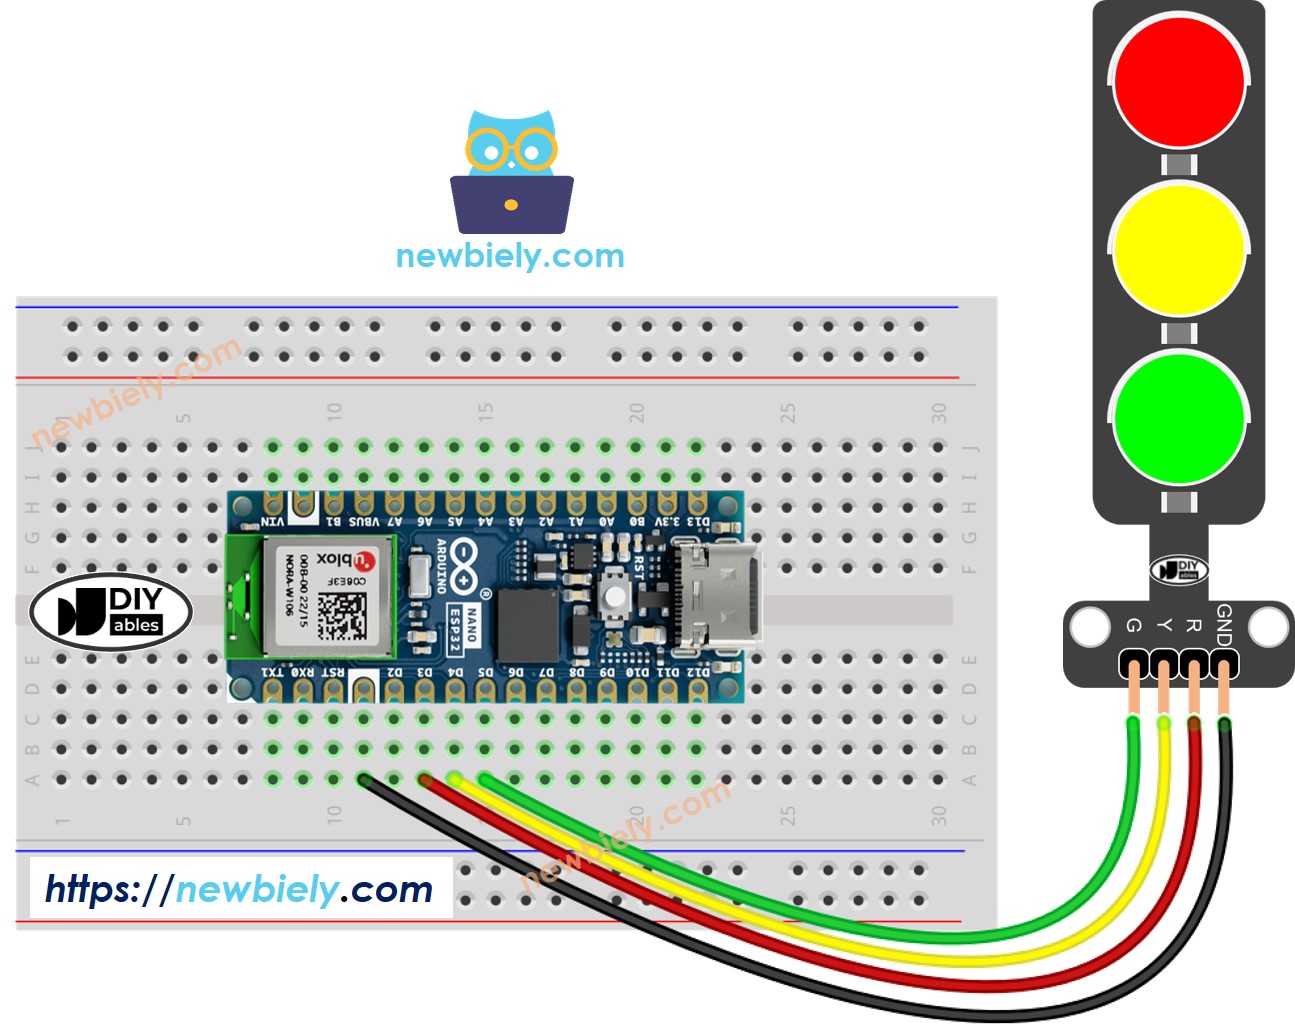 The wiring diagram between Arduino Nano ESP32 and traffic light